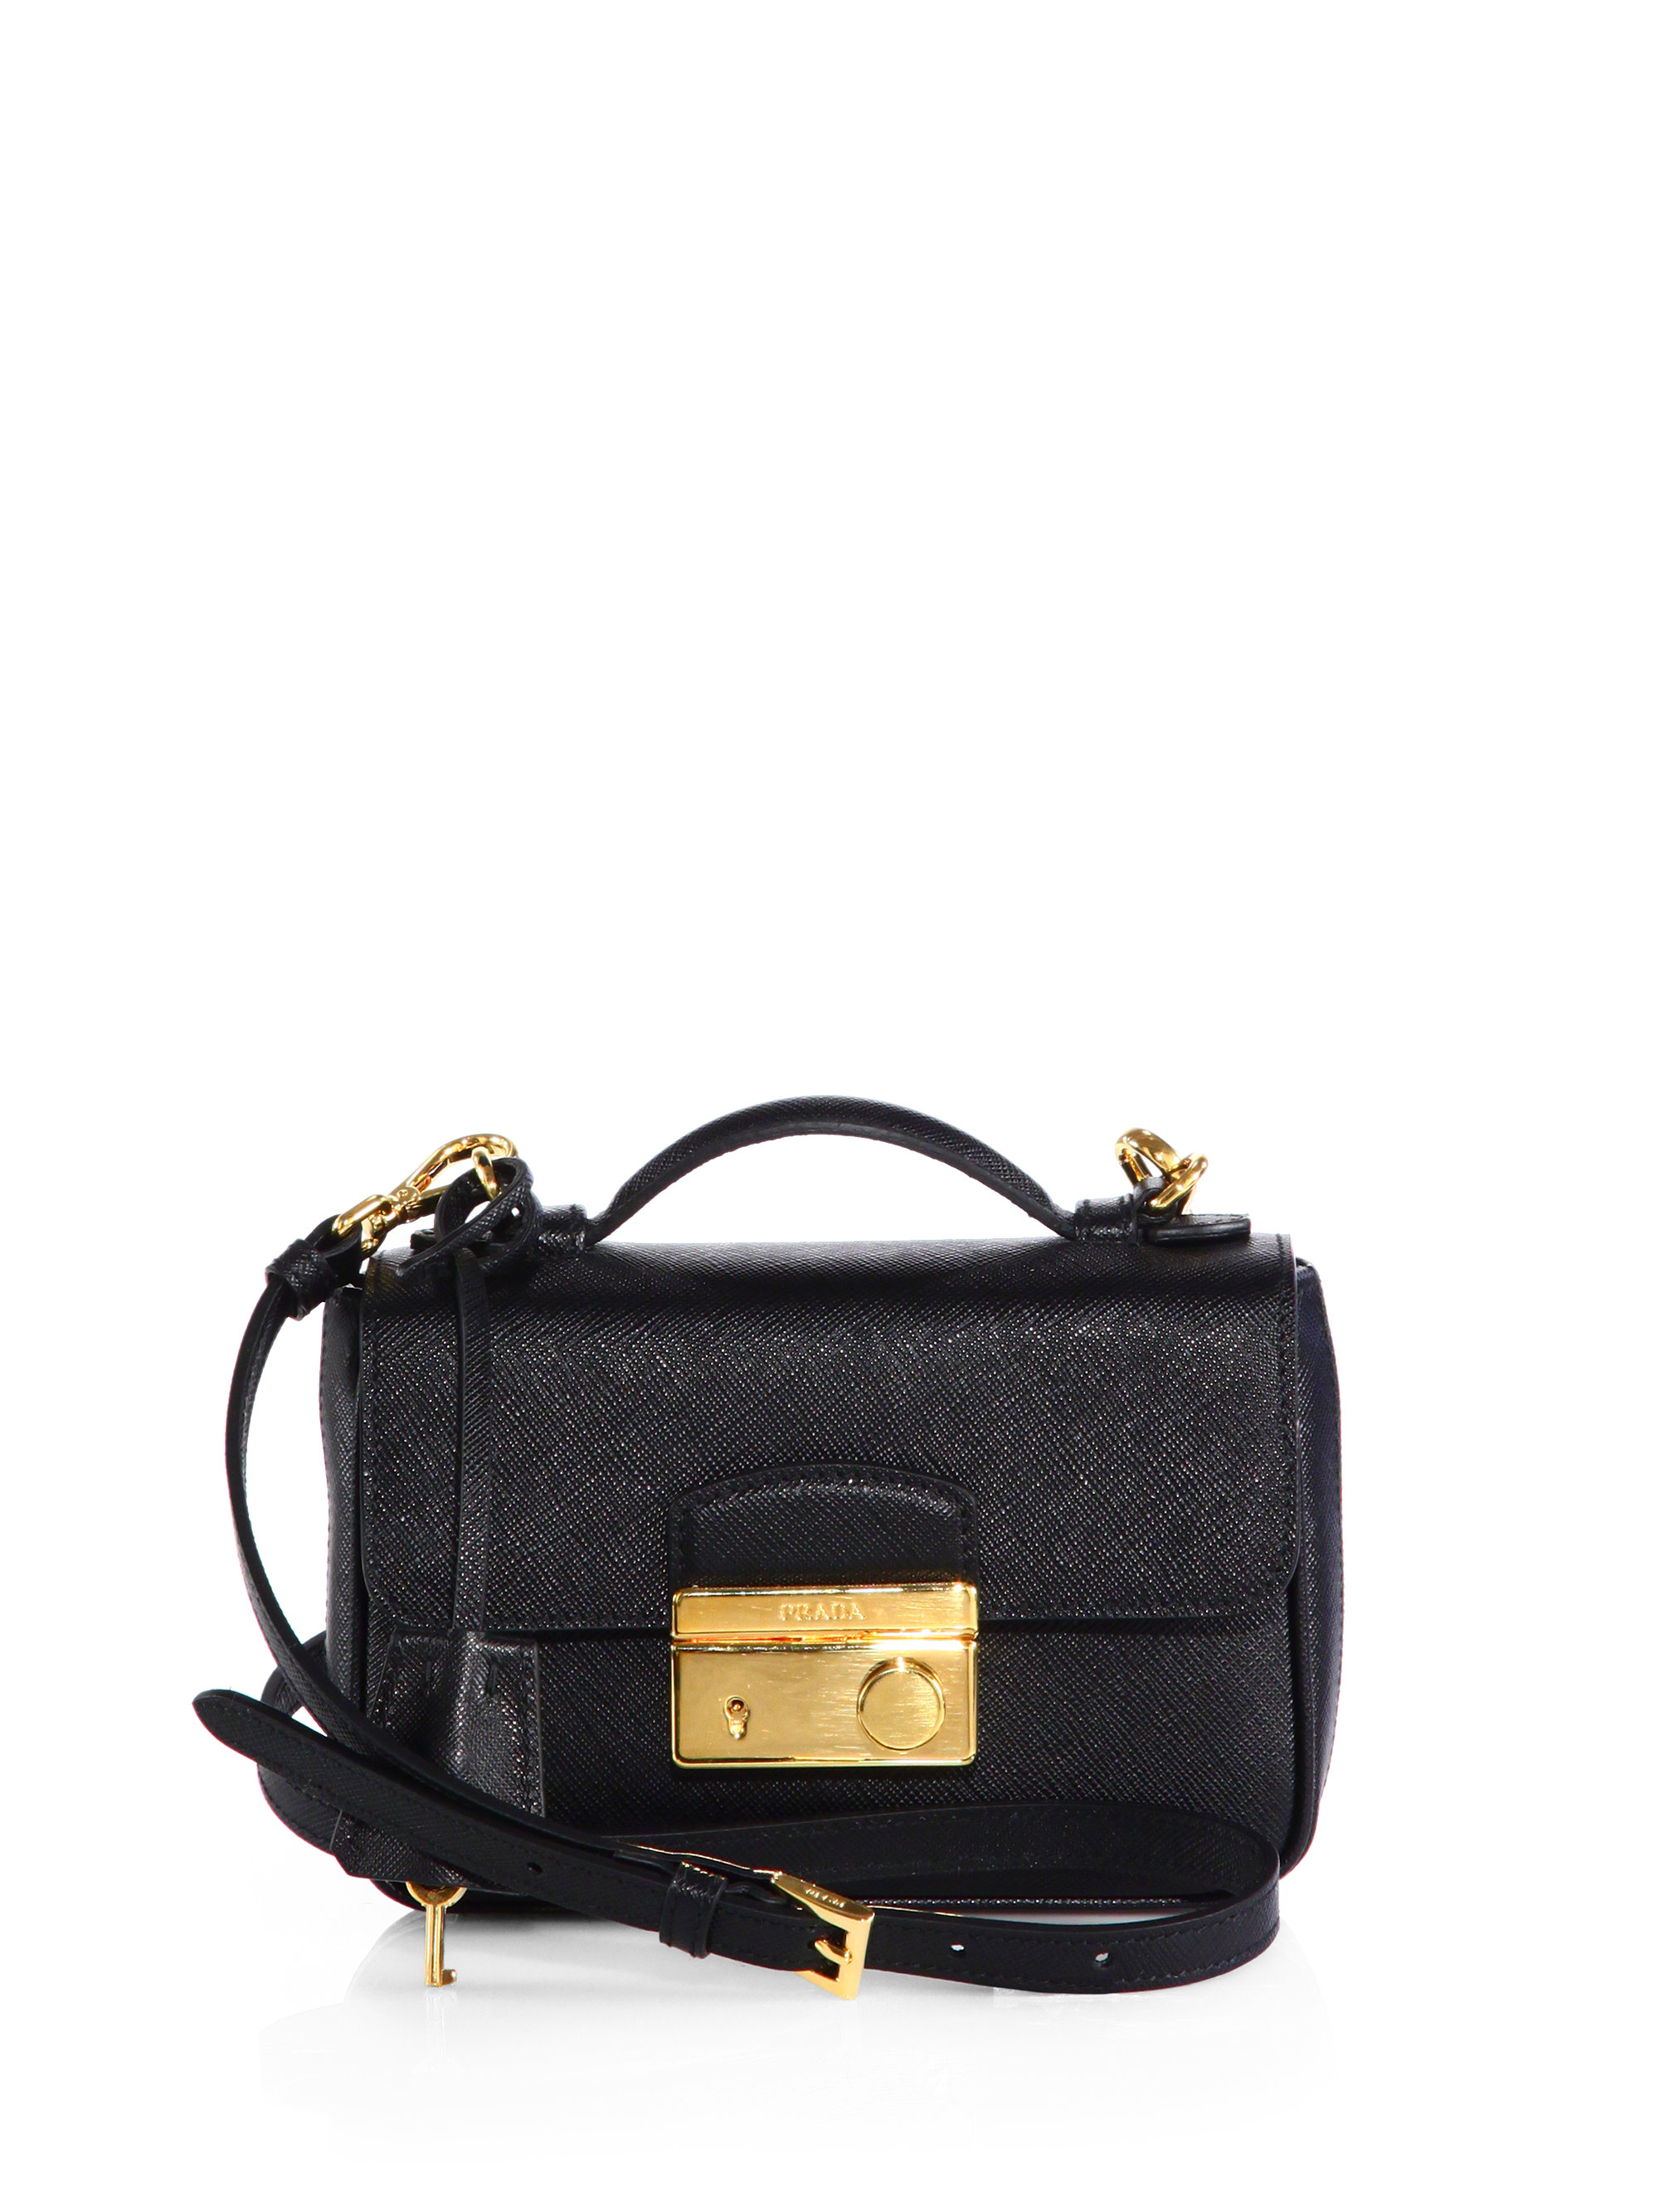 Prada Saffiano Leather Mini Flap Crossbody Bag in Black - Lyst